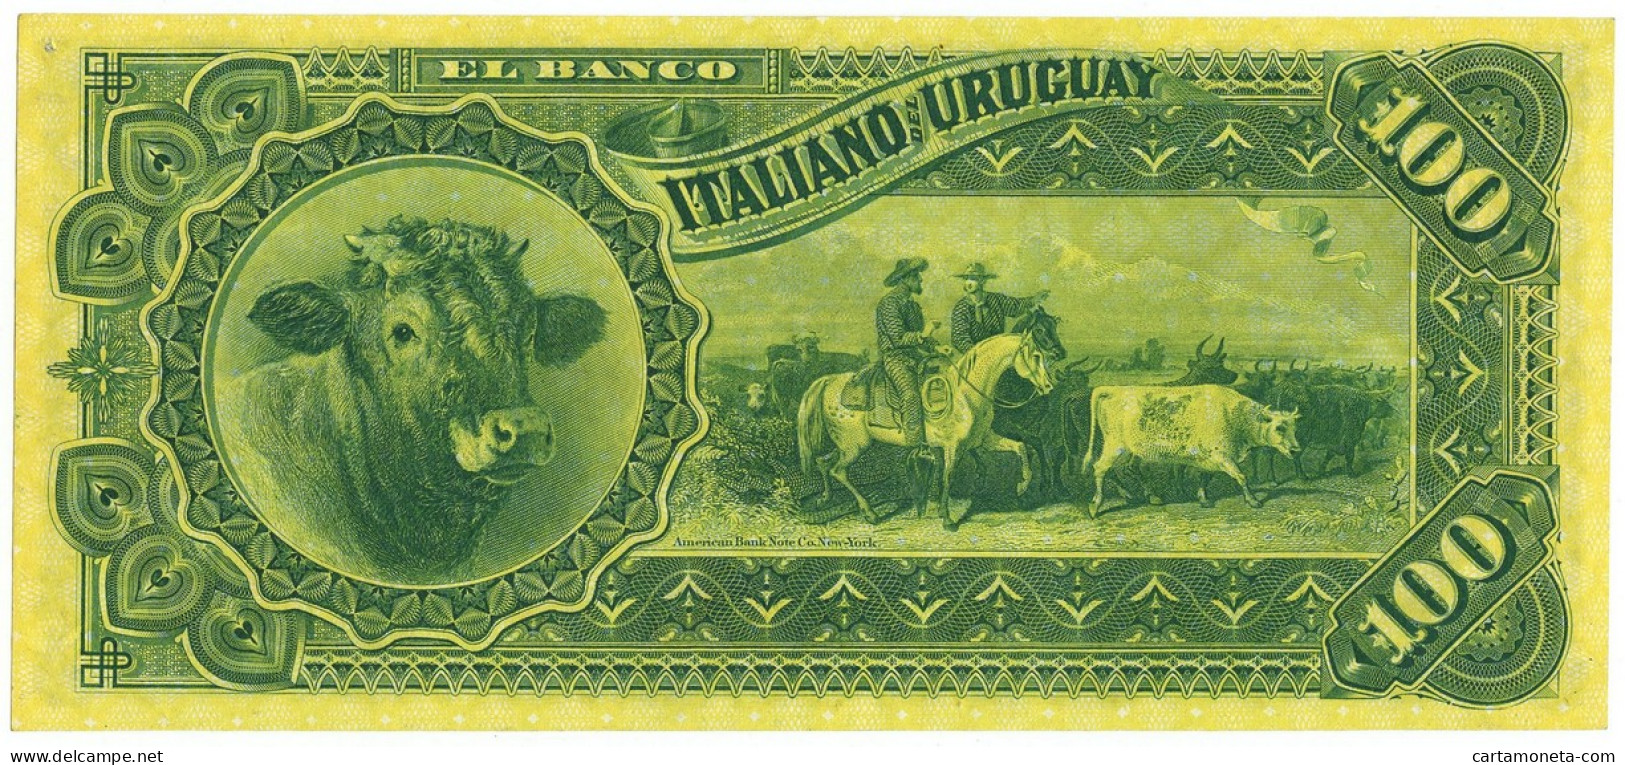 100 PESOS EL BANCO ITALIANO DELL'URUGUAY MONTEVIDEO 20/09/1887 QFDS - [ 7] Errors & Varieties